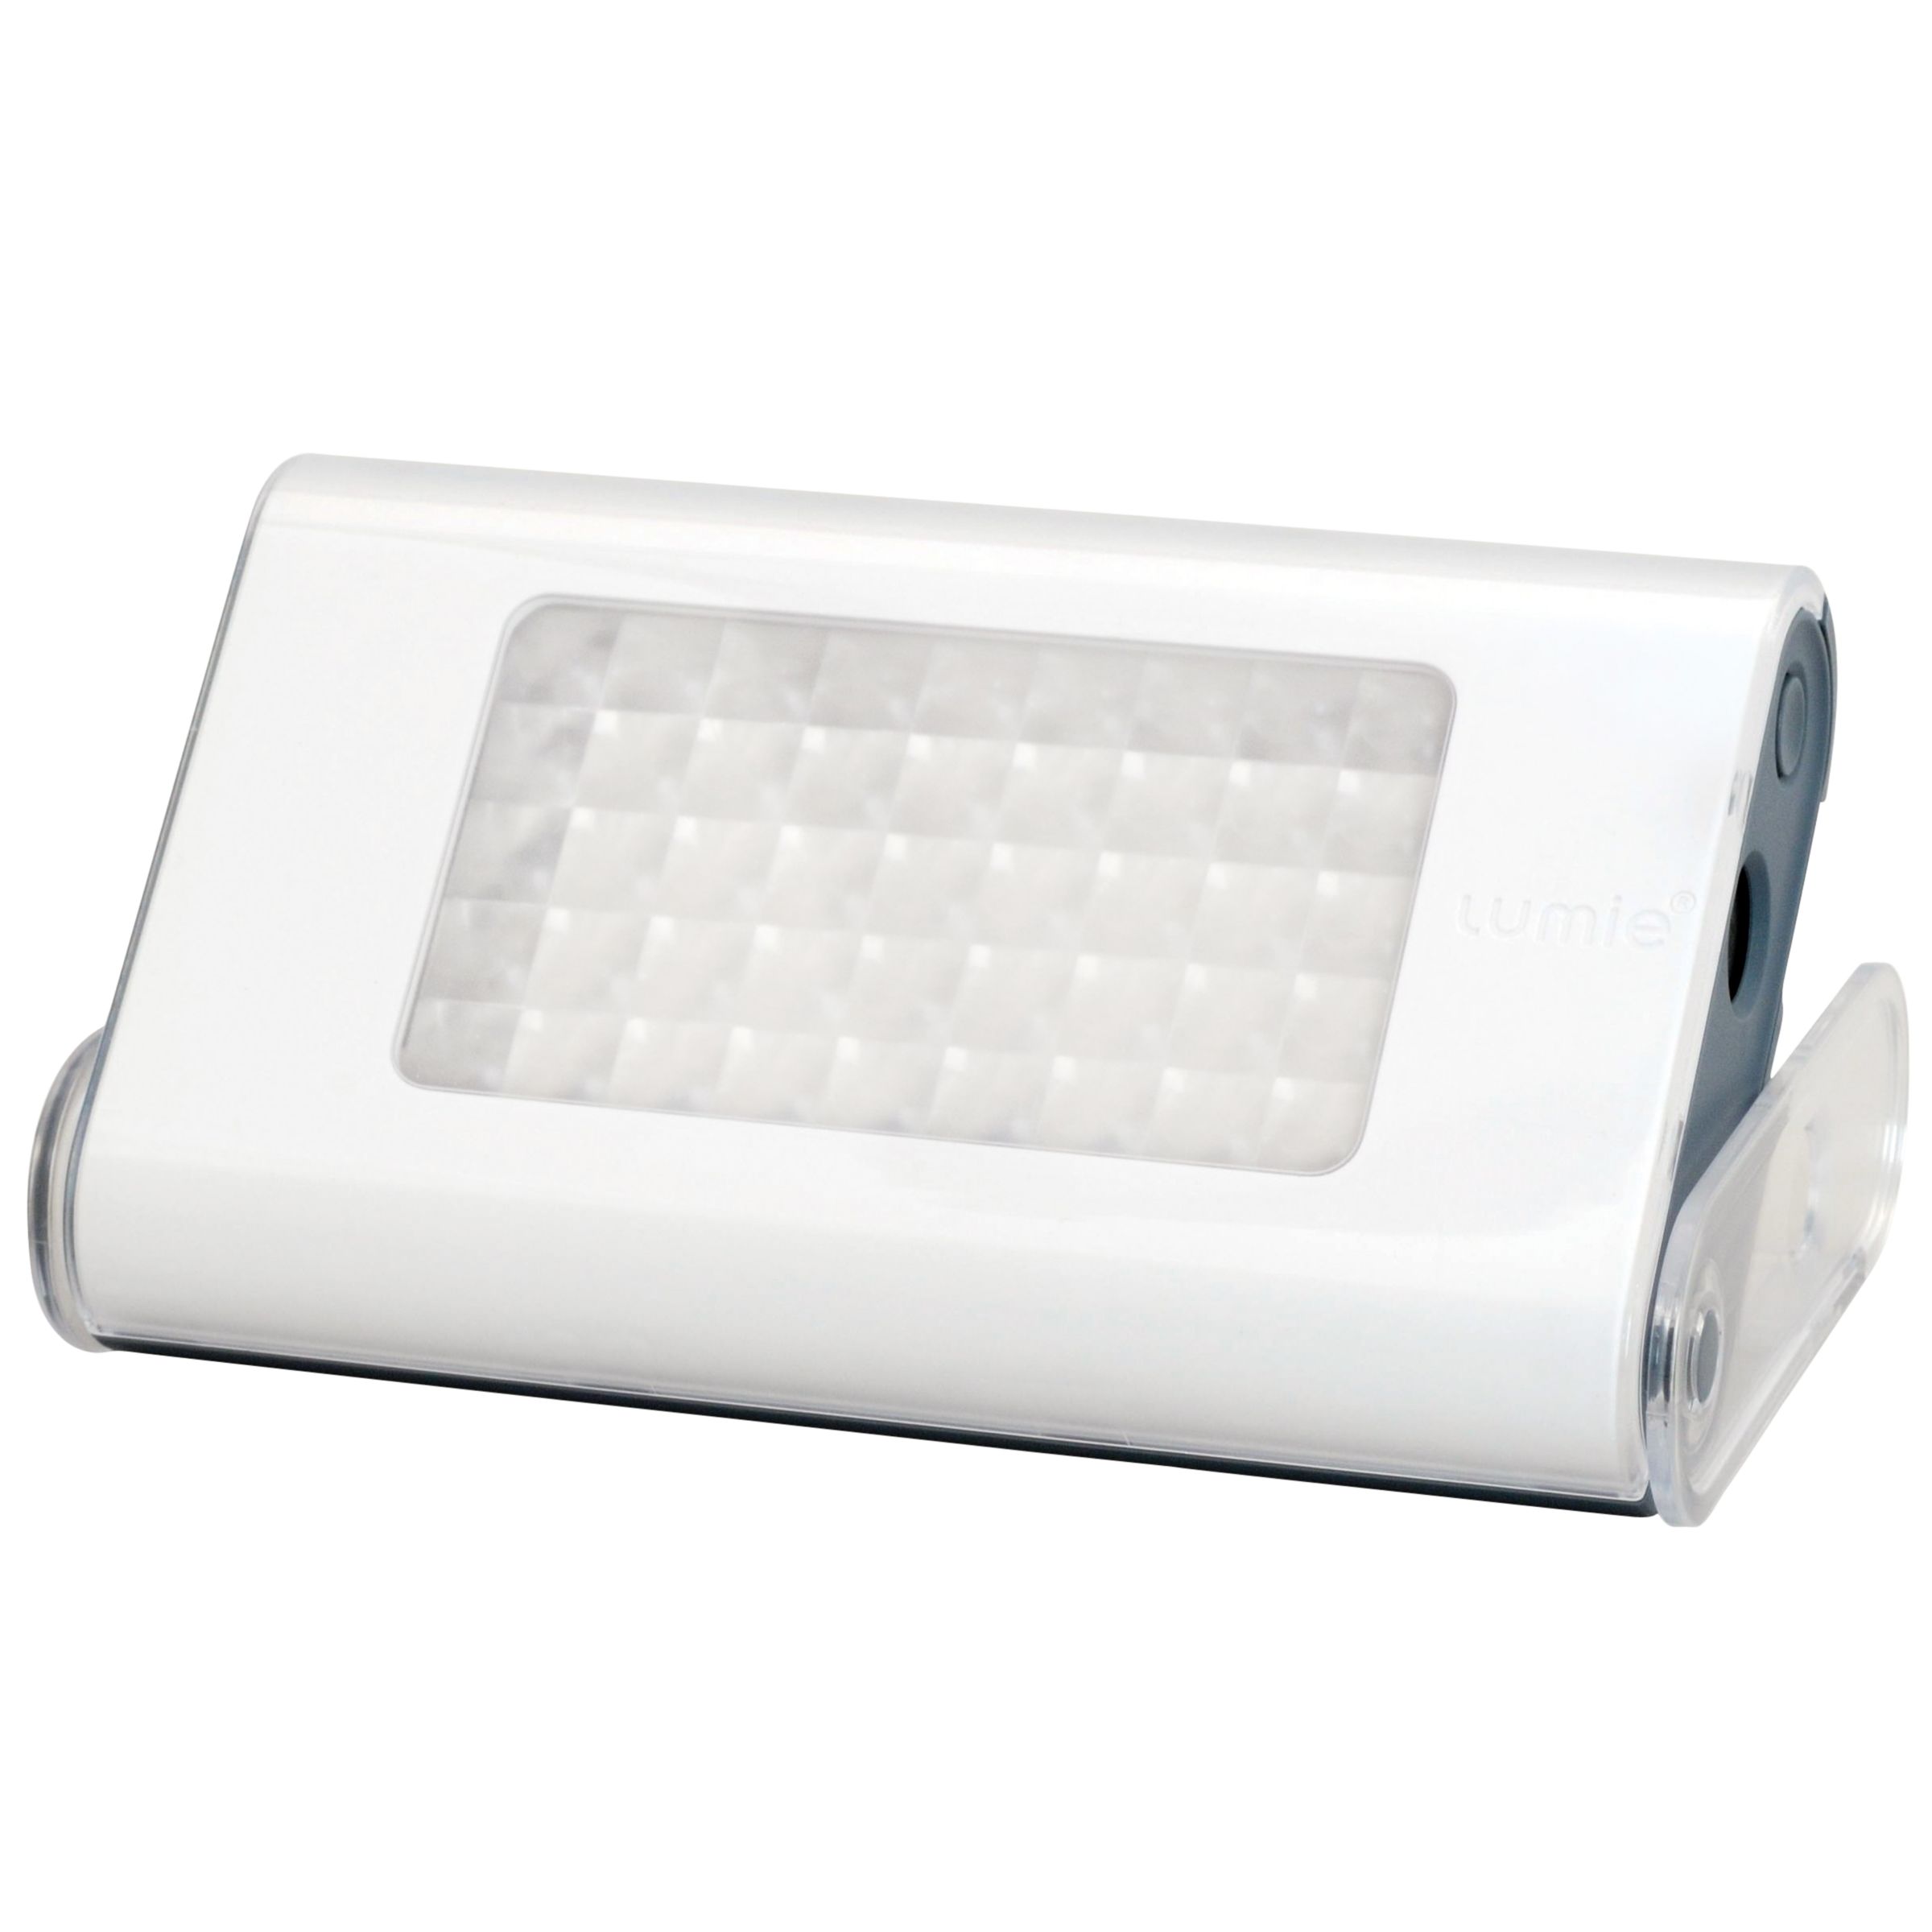 Lumie Zip Portable SAD Light Box 151981